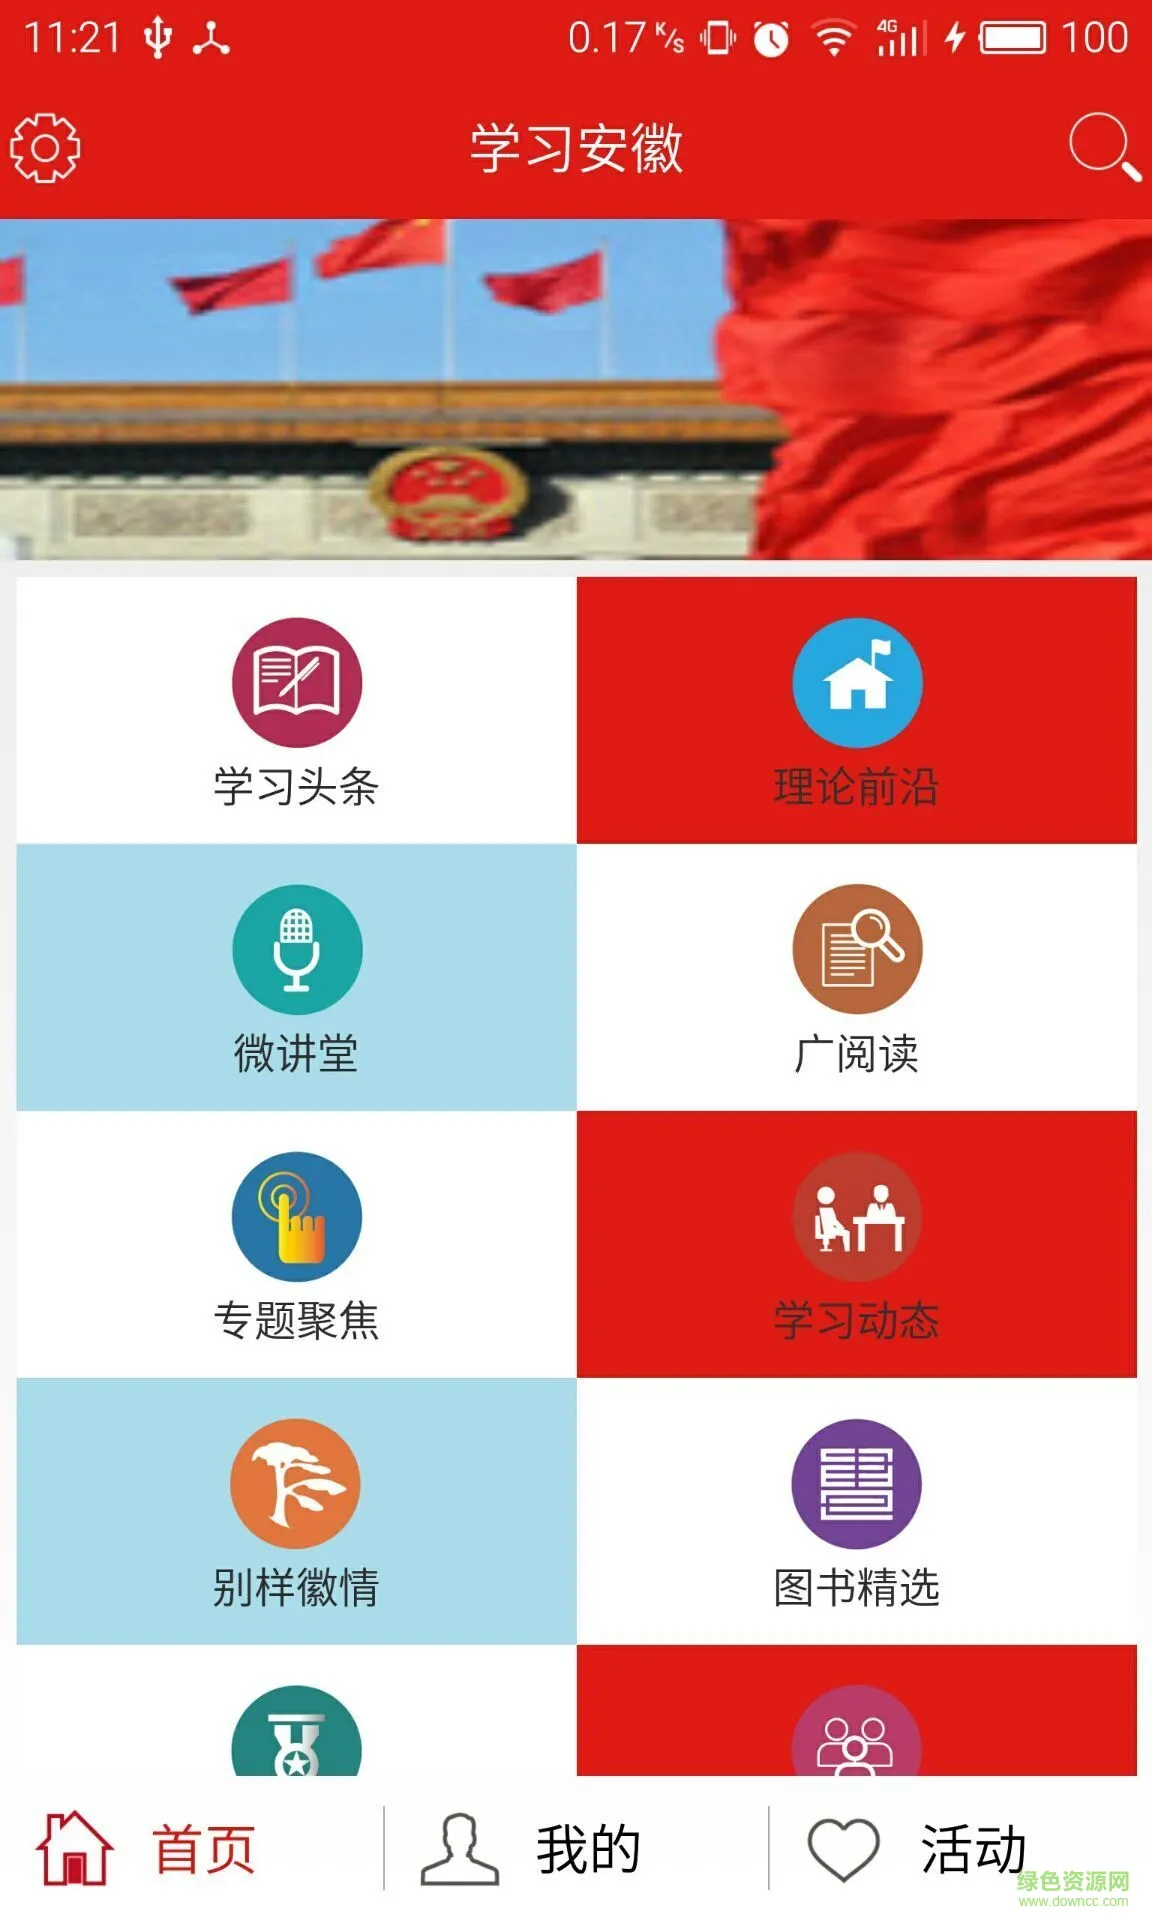 学习安徽(党员学习) v1.3.2 安卓版 1